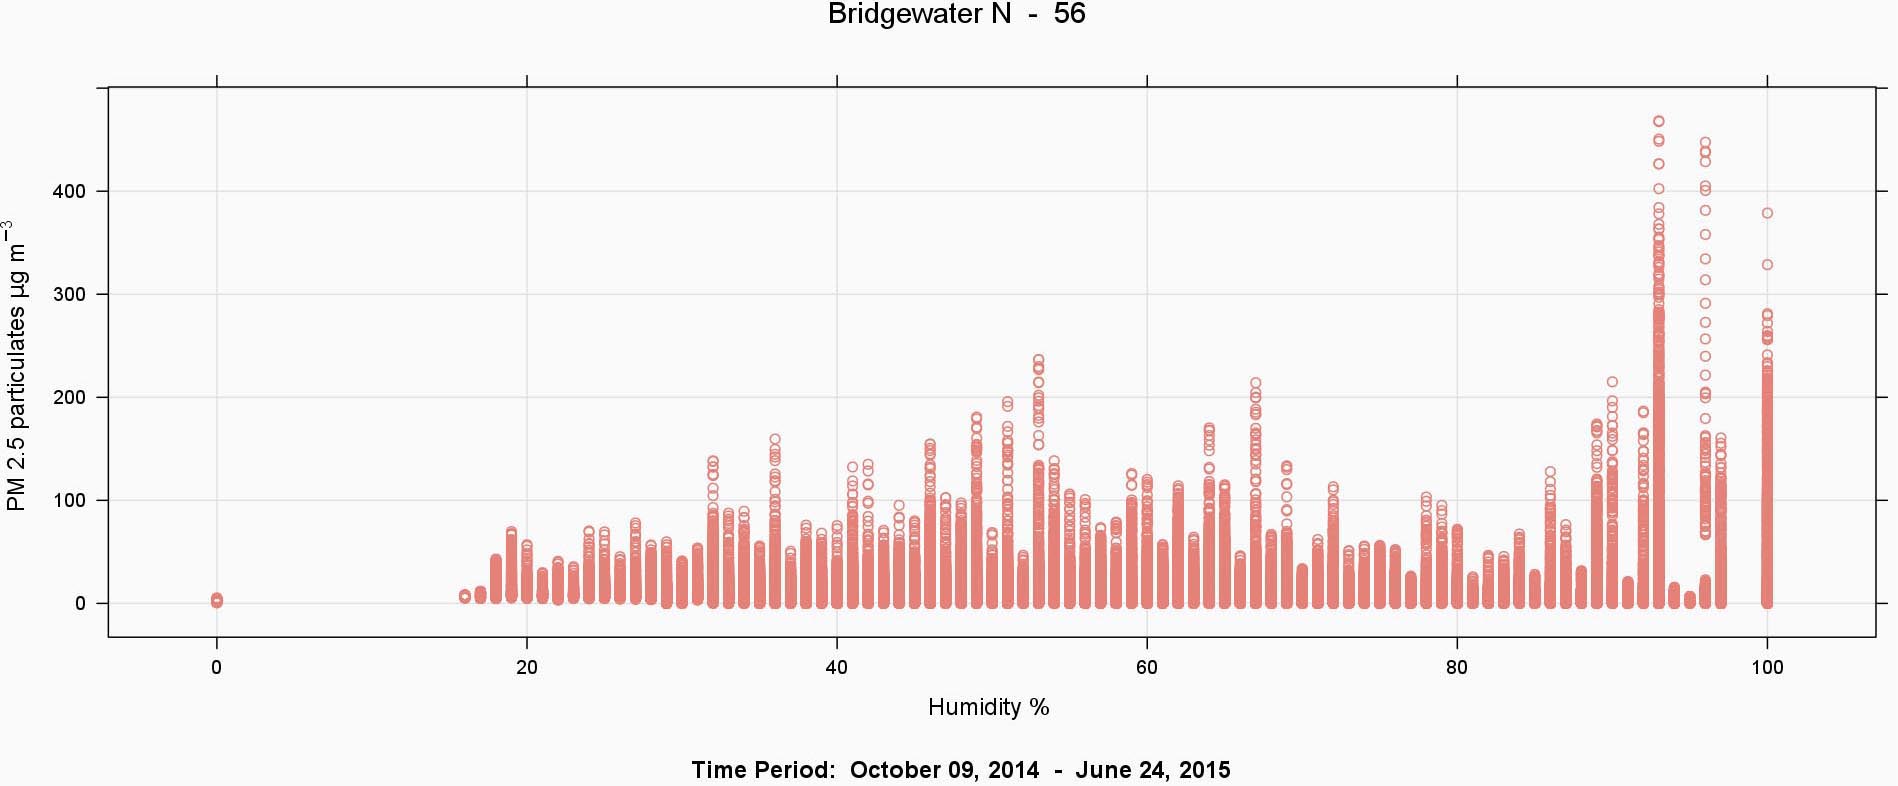 Fig8_BridgewaterN56_Humidity_Scatter-1